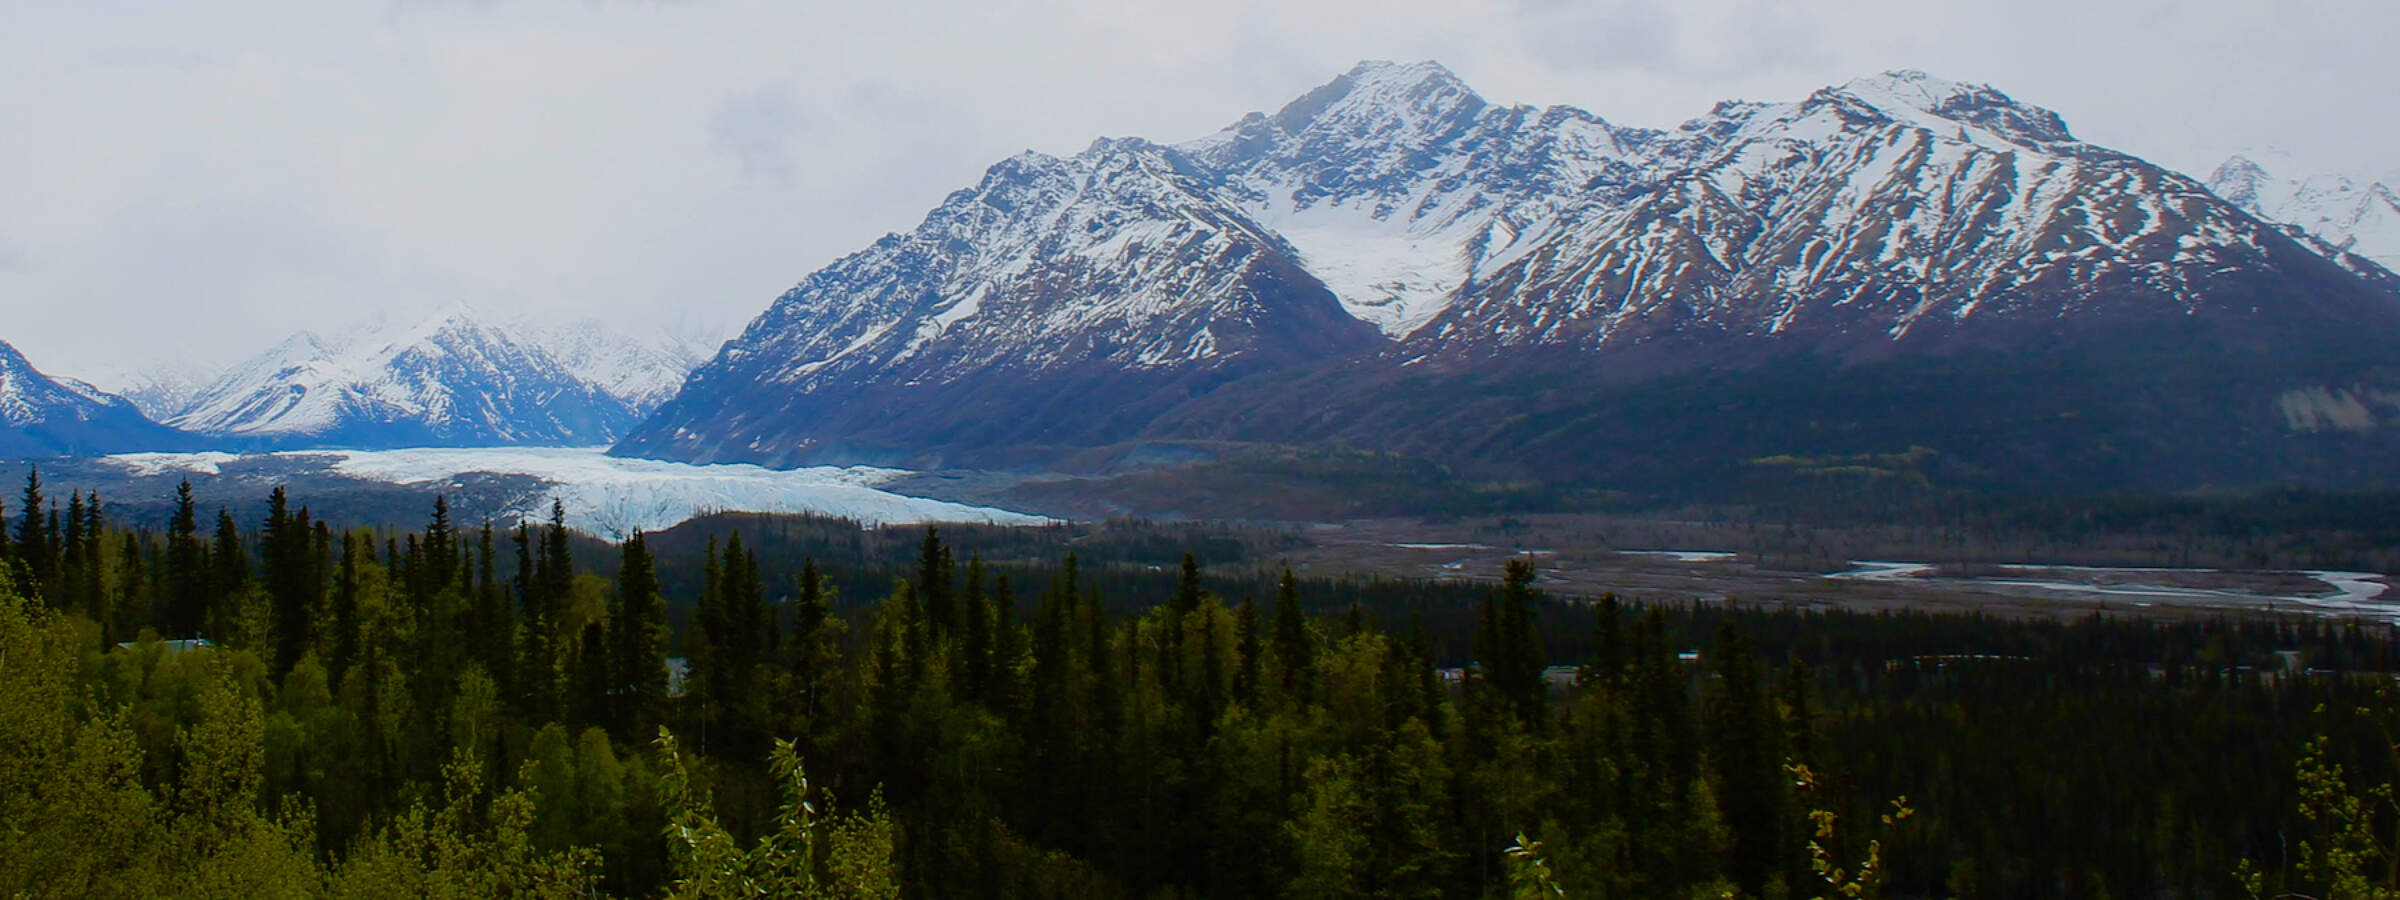 View of the Matanuska Glacier from the Glenn Highway